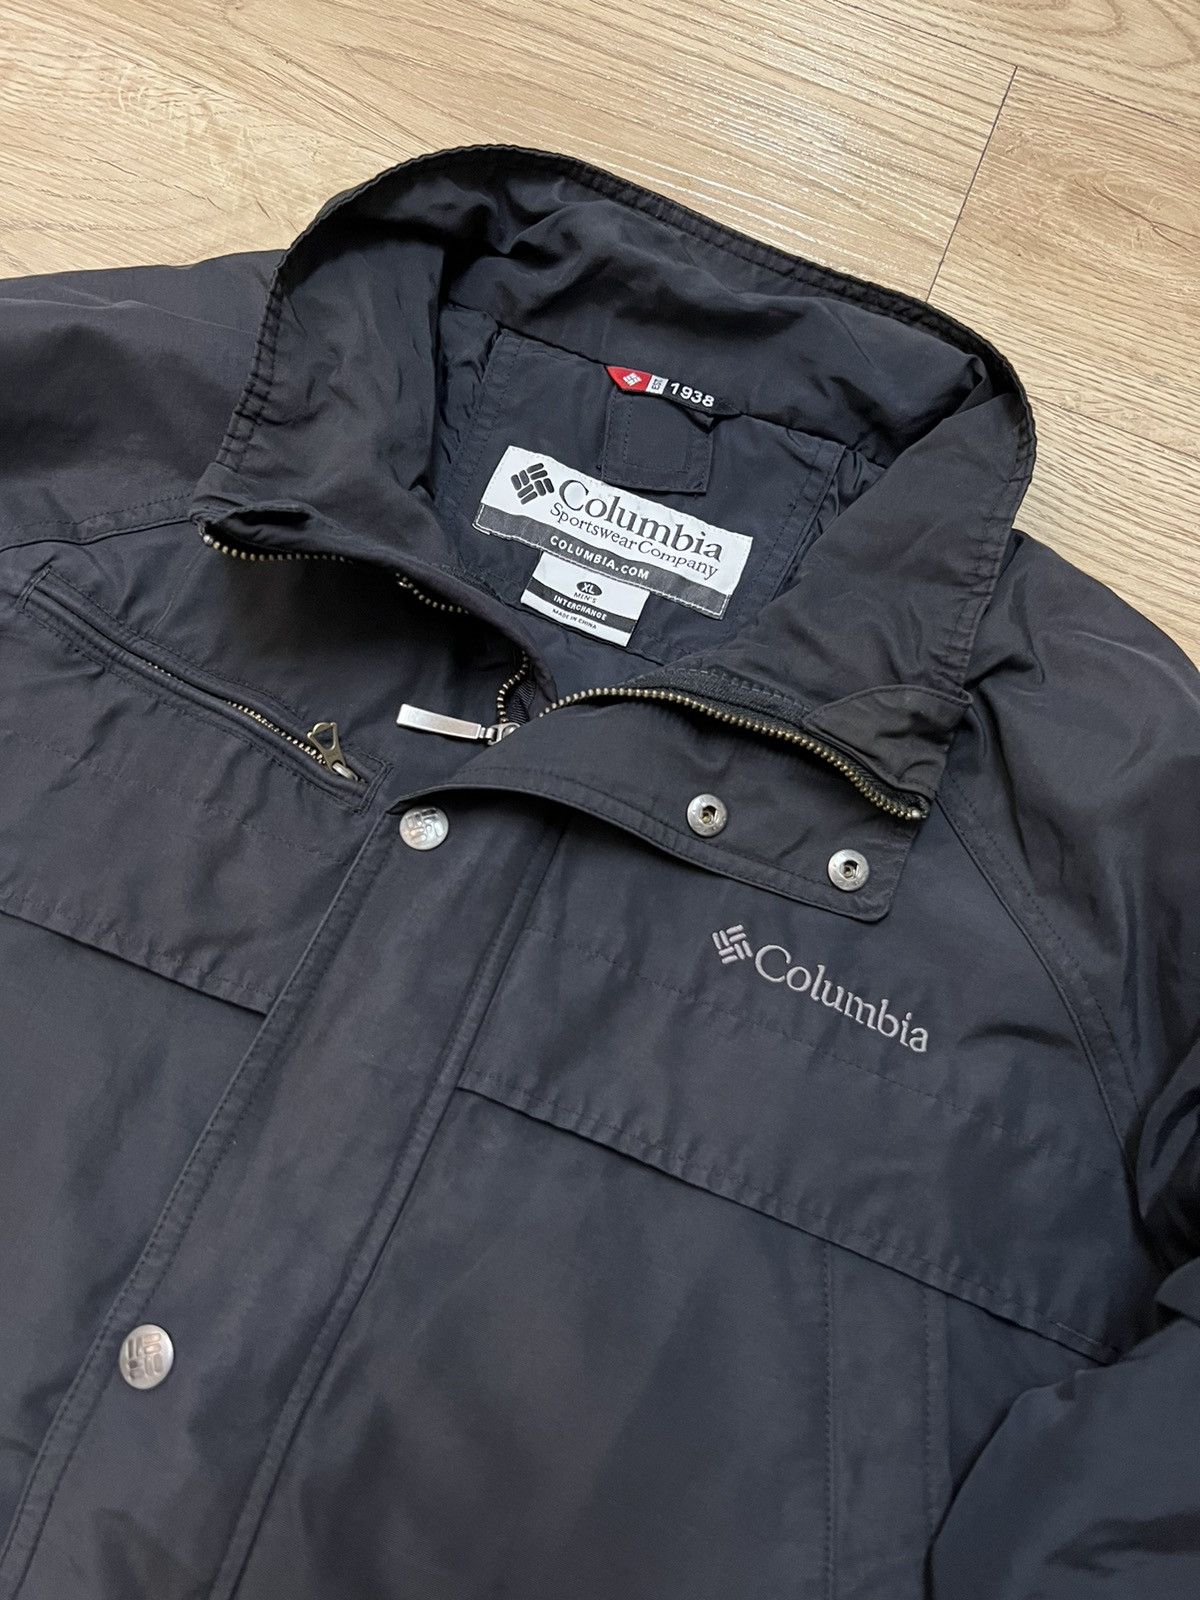 Columbia Columbia Omni-Shield Jacket Size US XL / EU 56 / 4 - 4 Thumbnail